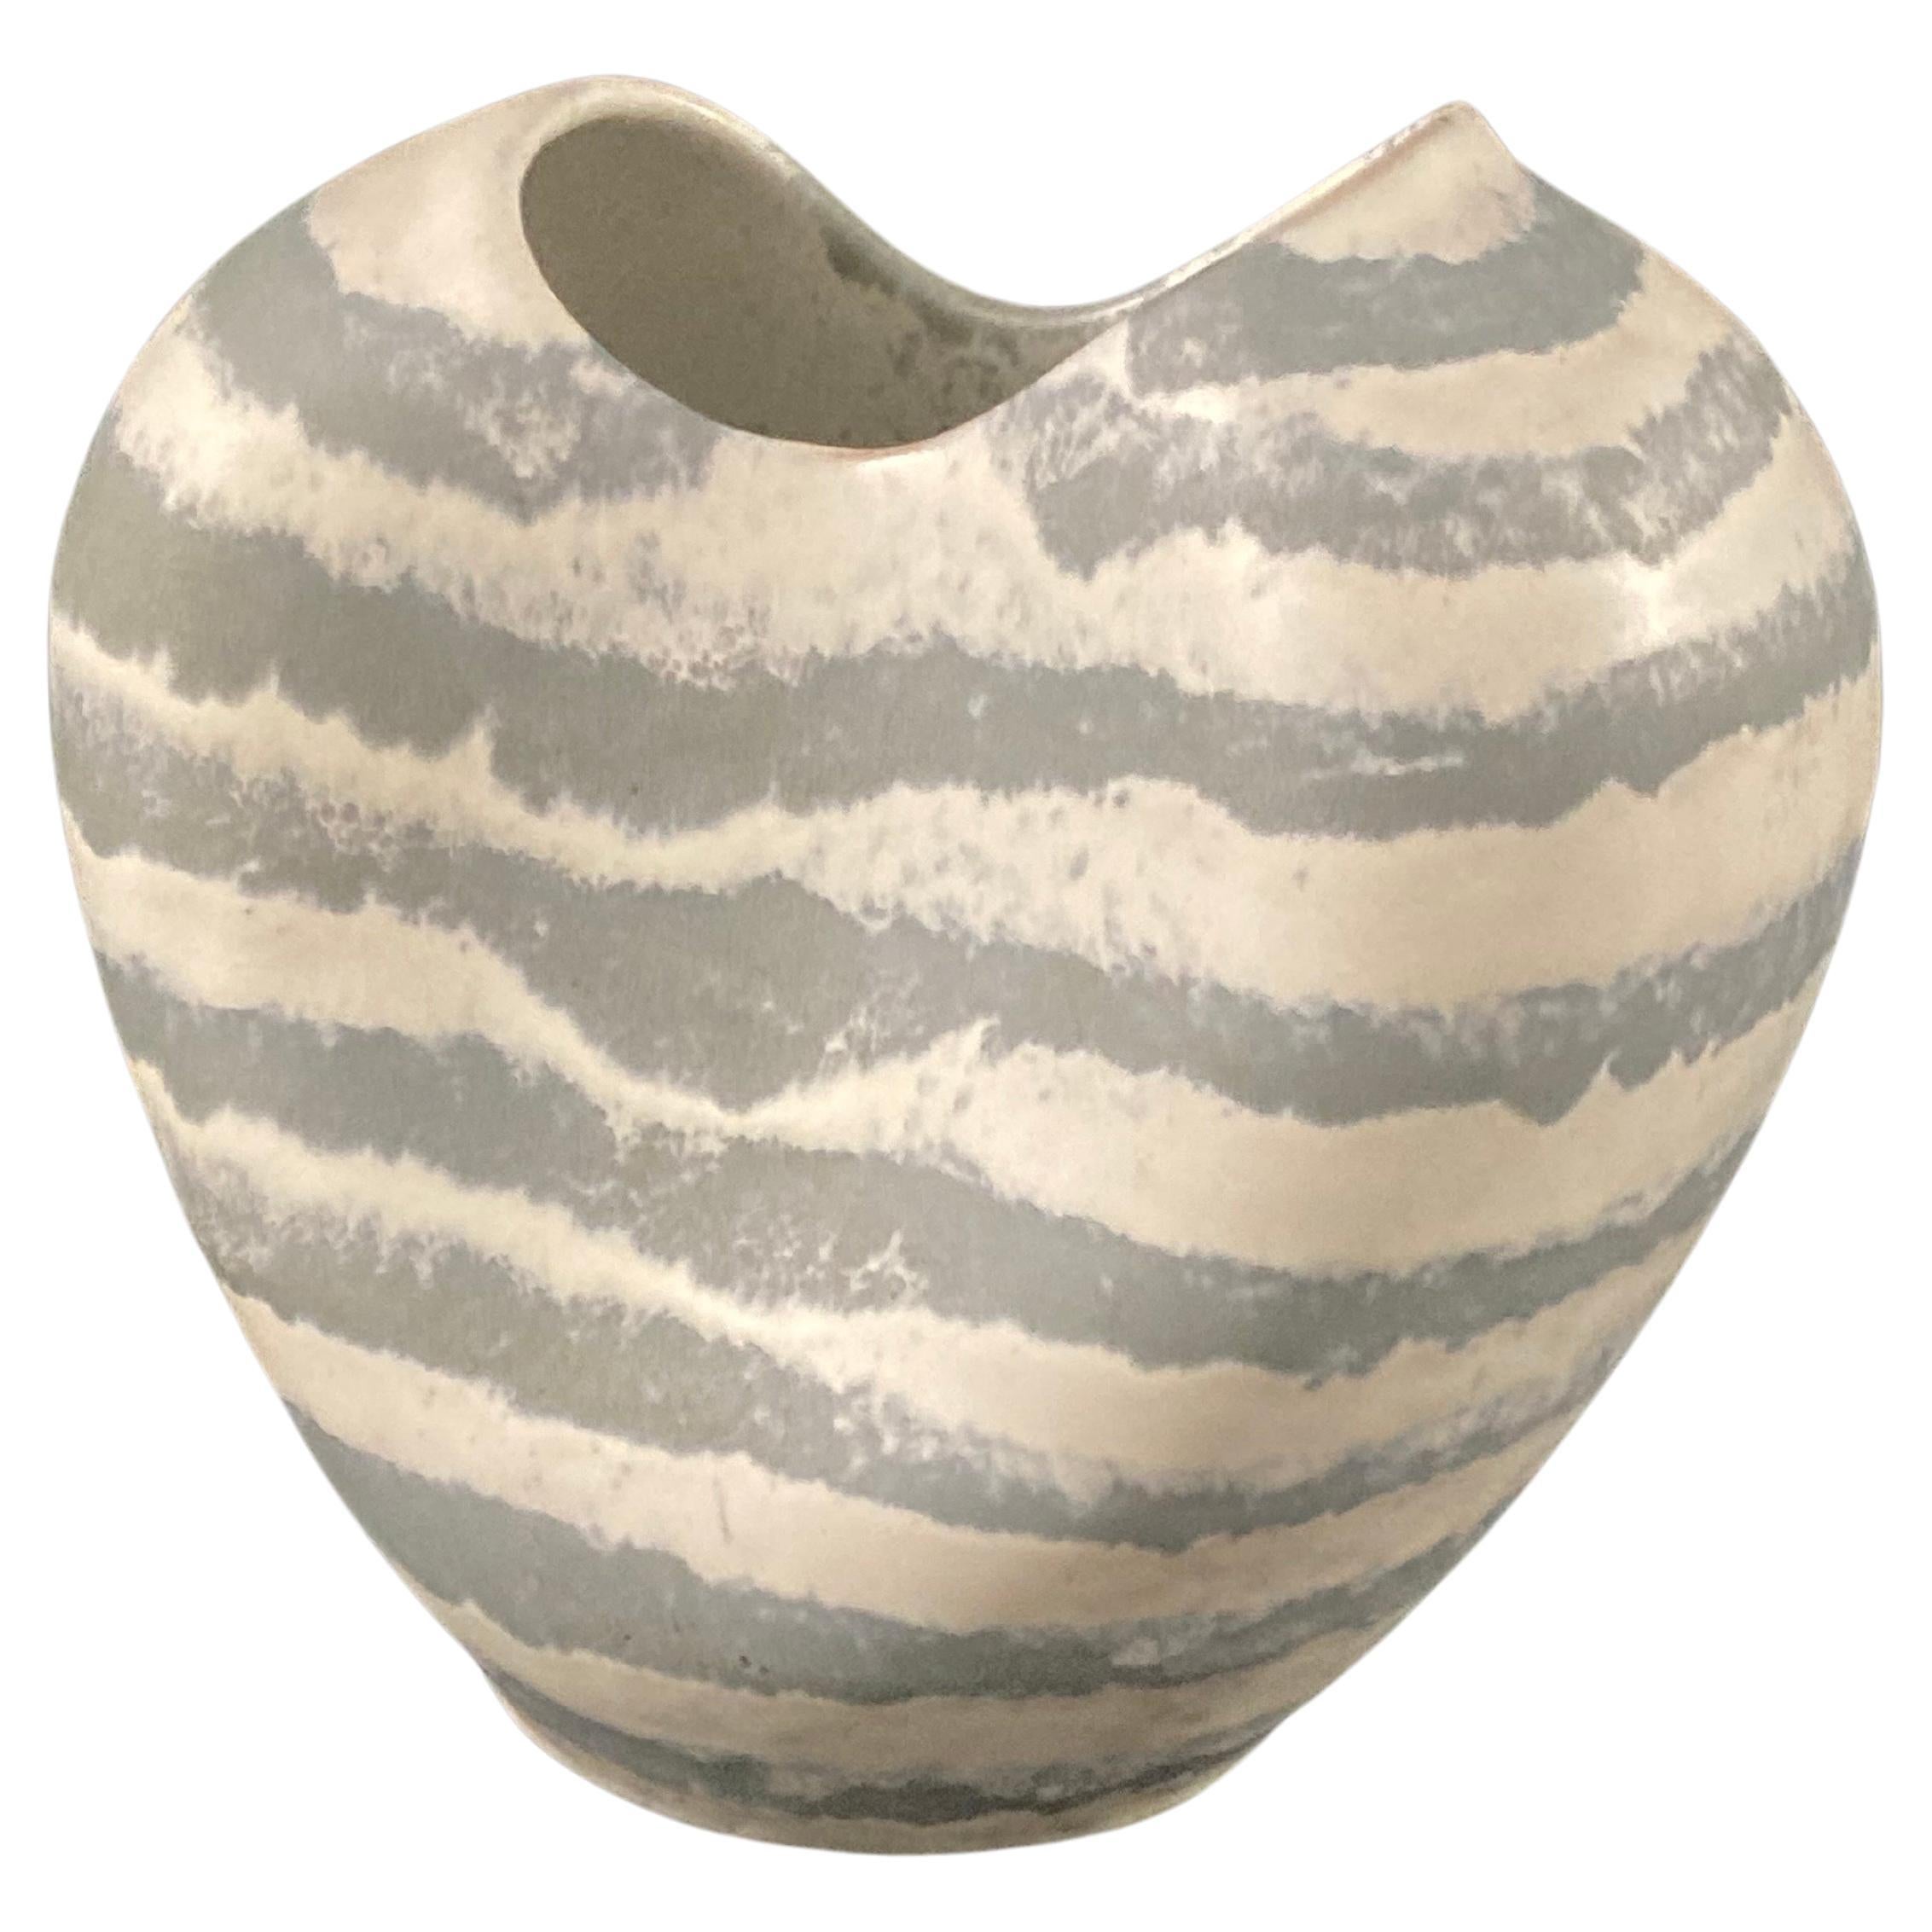 A 1960s West German ceramic vase by Carstens